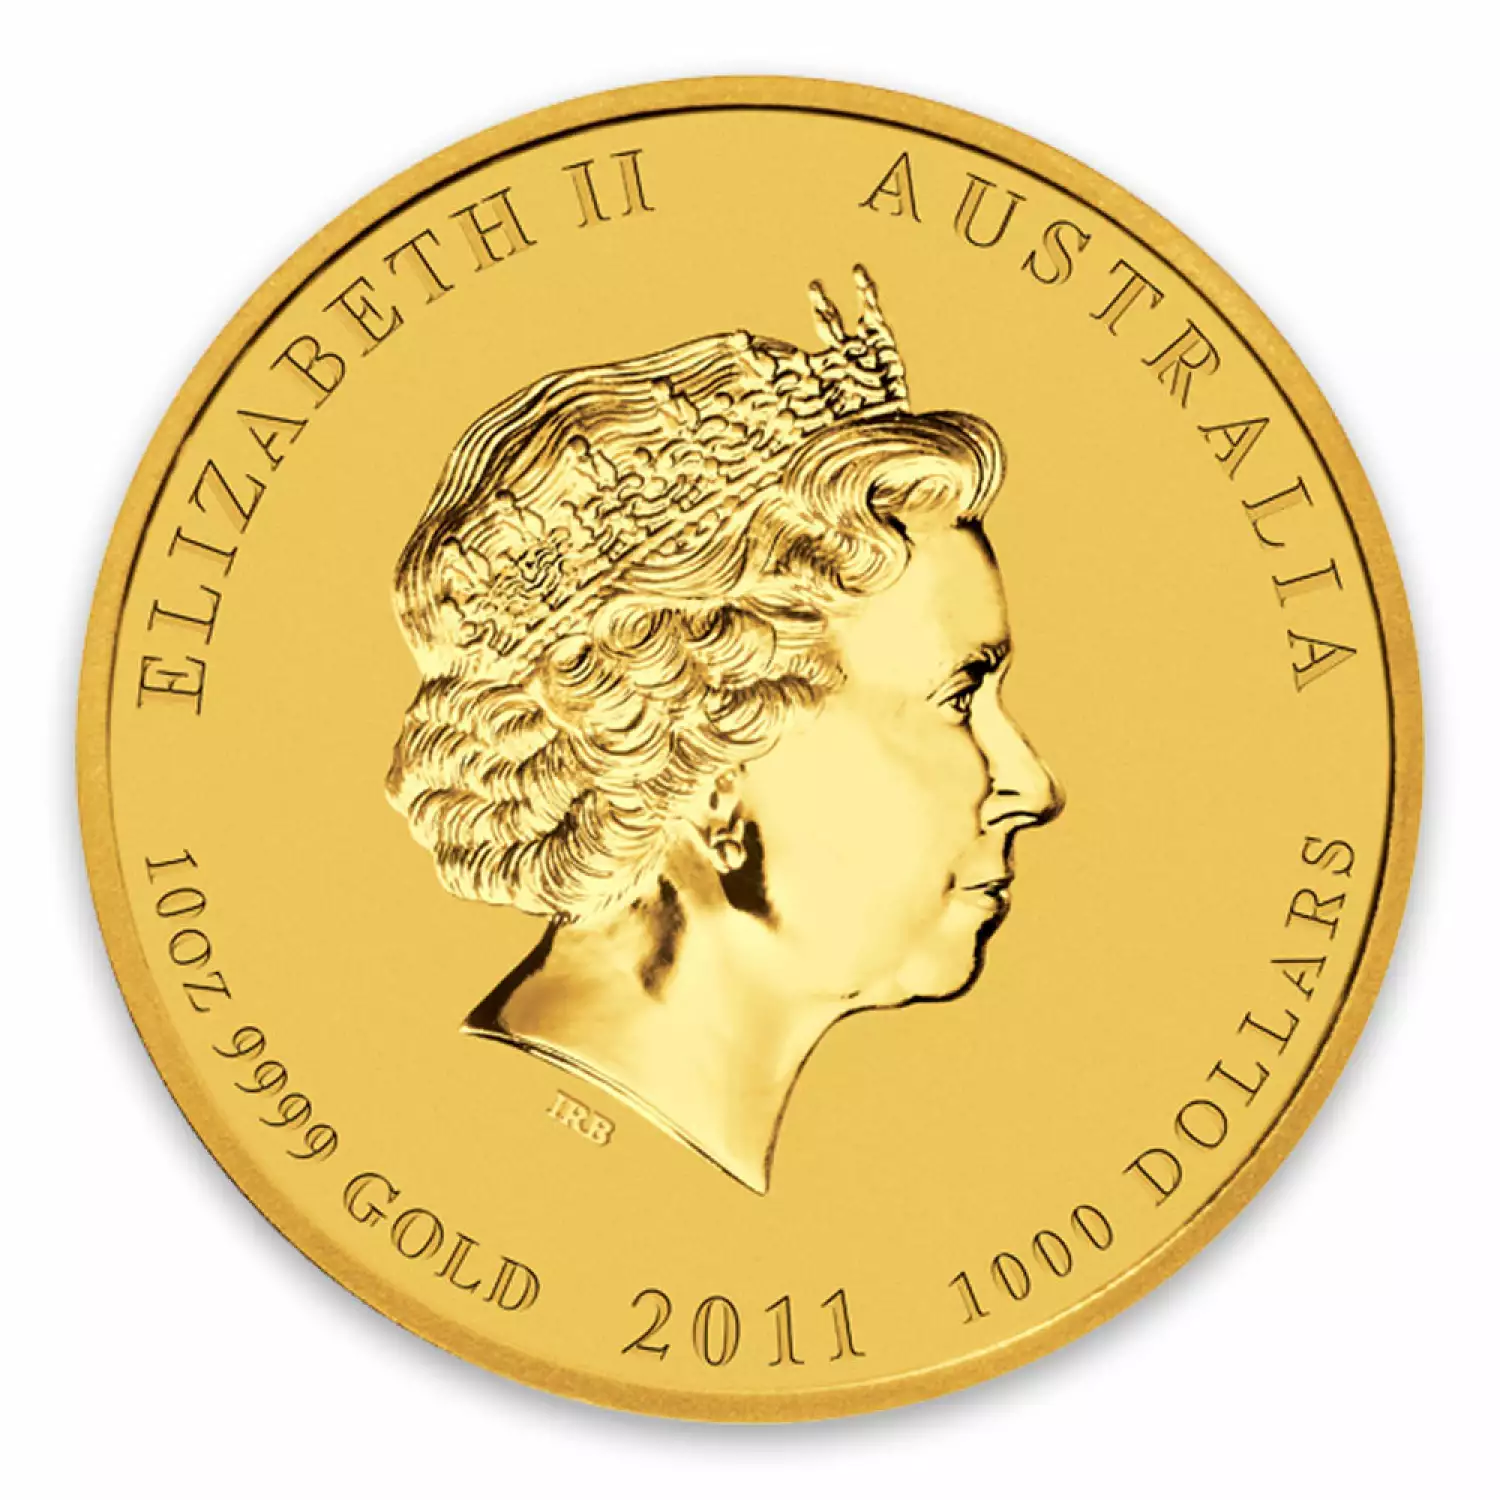 2011 10 oz Australian Perth Mint Gold Lunar II: Year of the Rabbit (2)